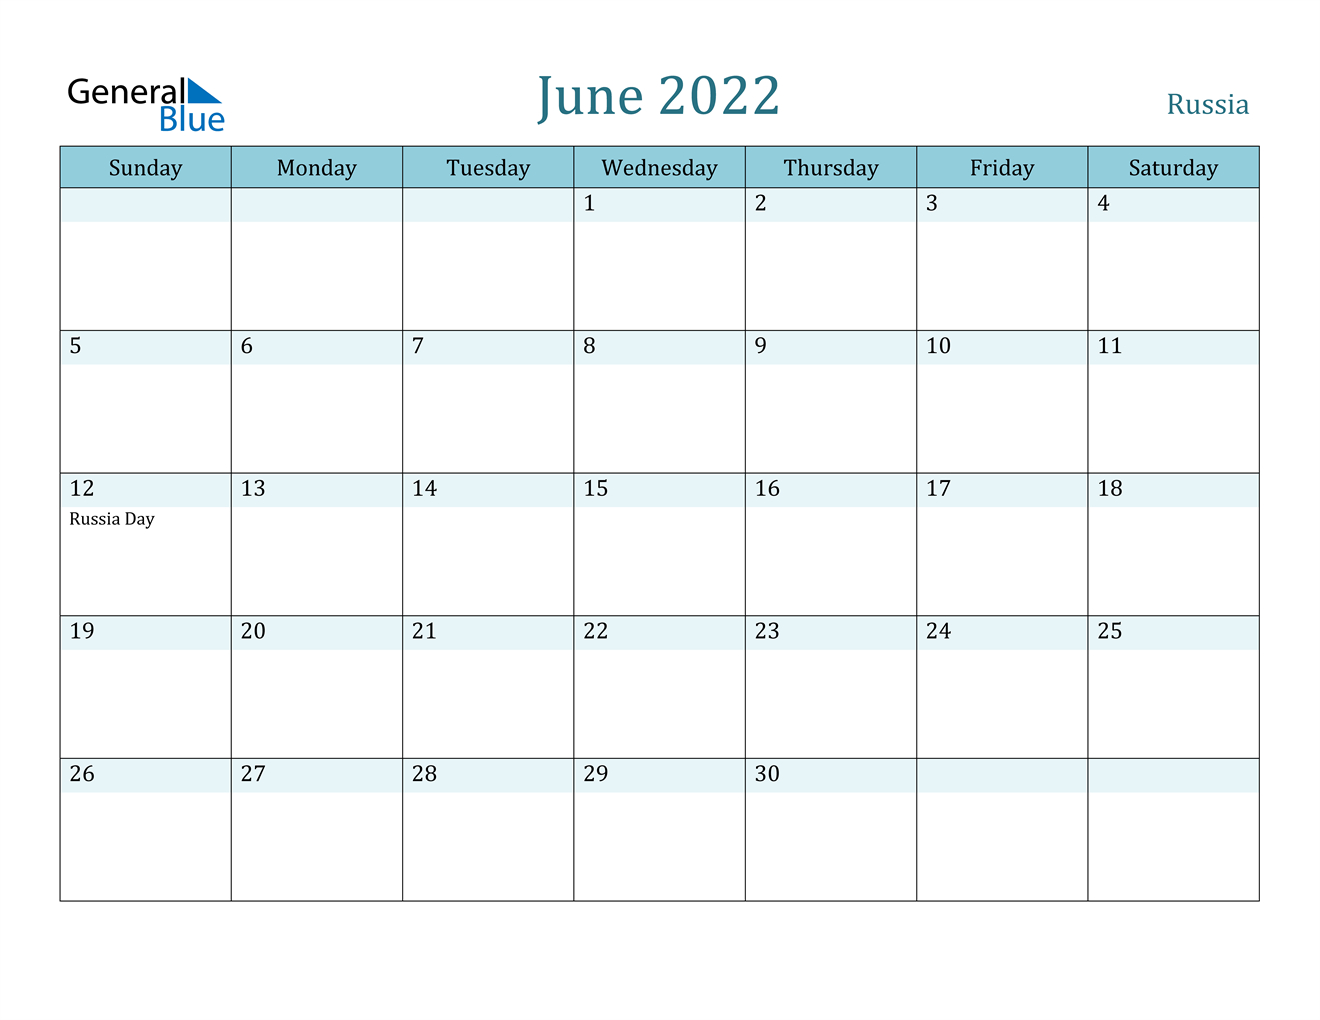 Get Printable Calendar For June 2022